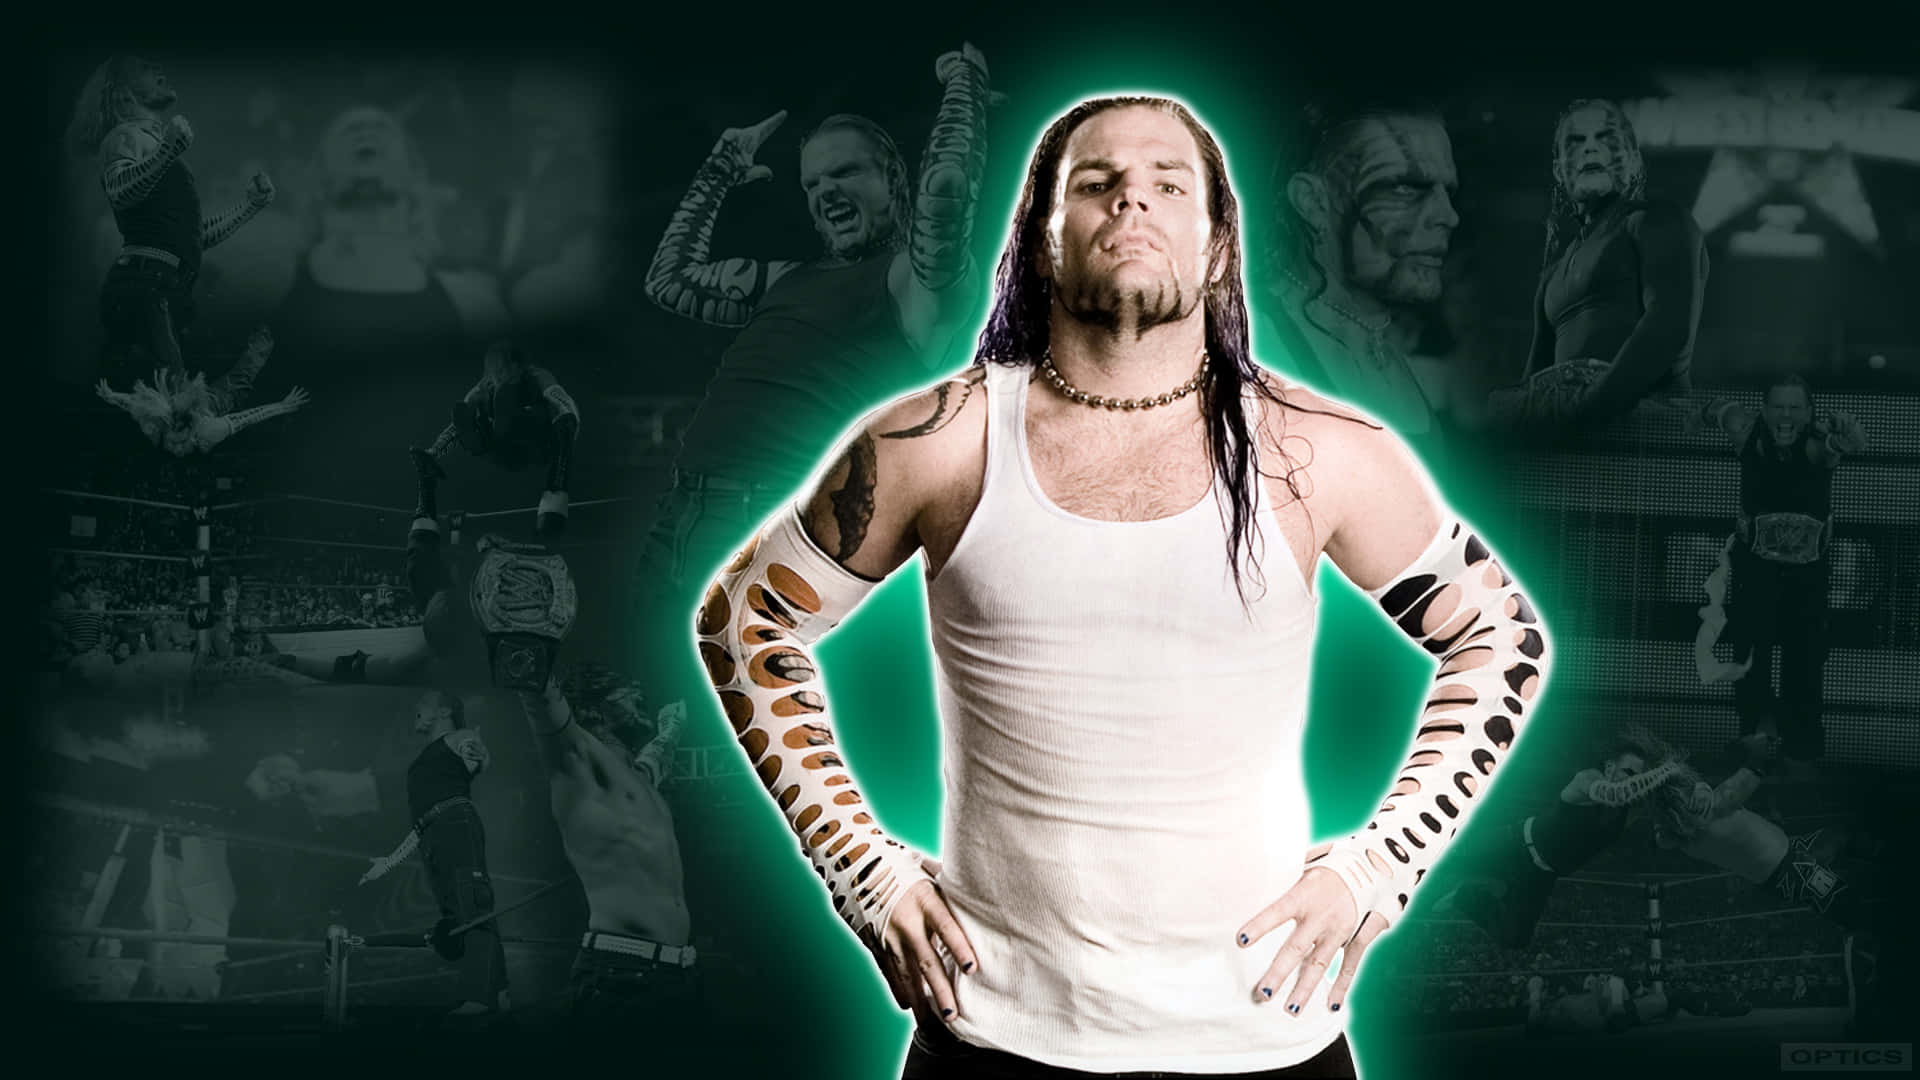 Wrestler Jeff Hardy Cool Poster